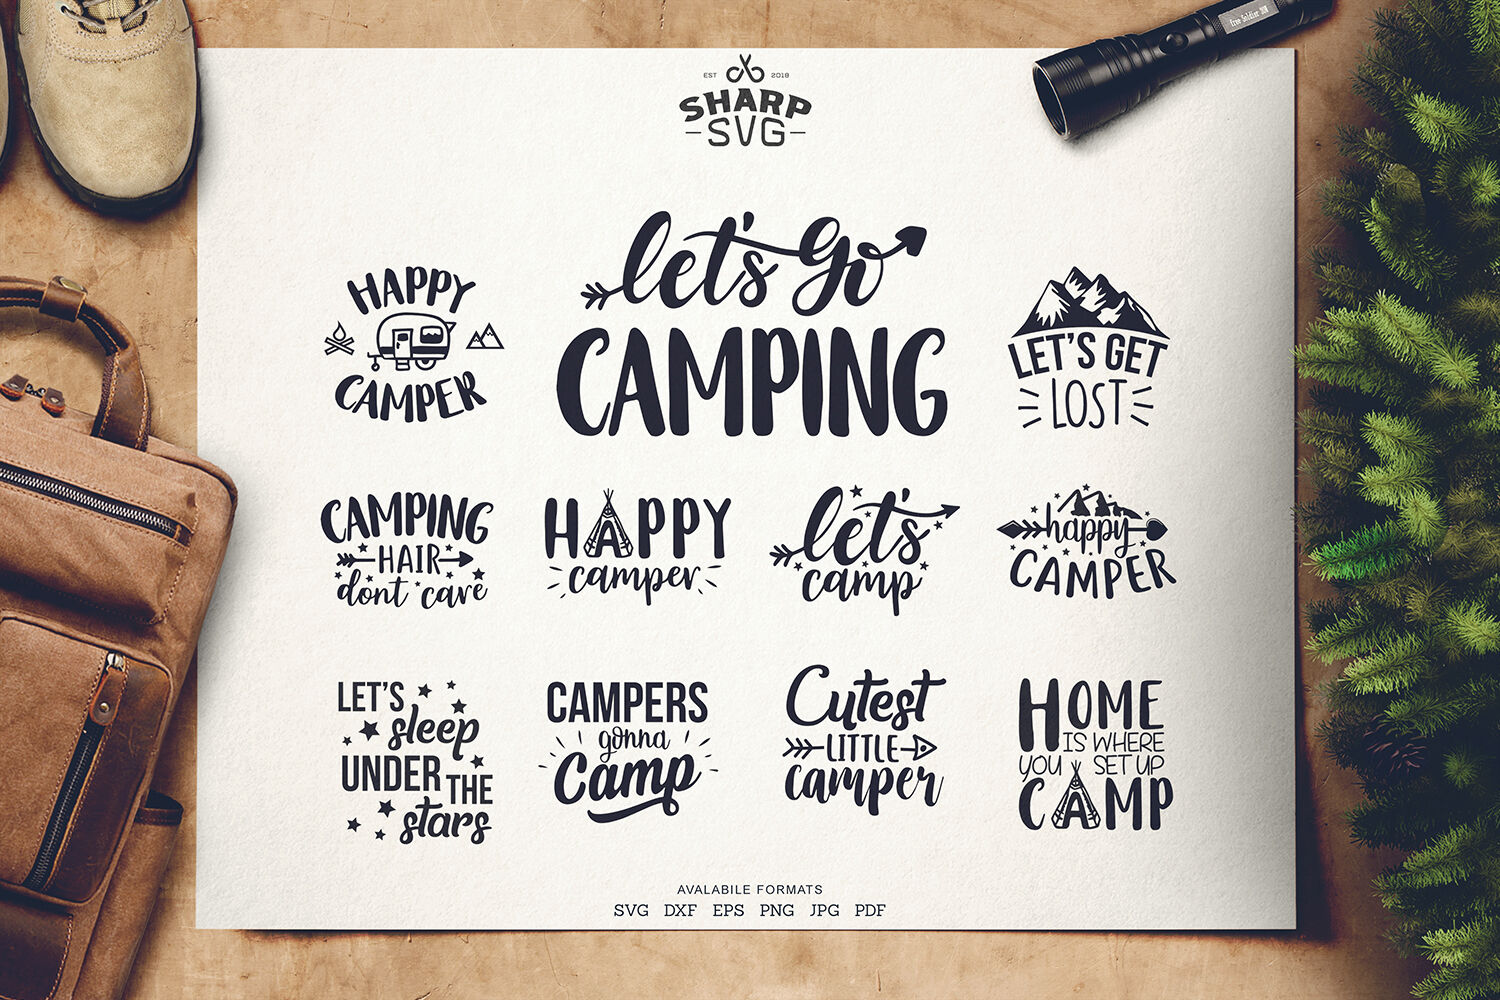 Camper Svg Happy Camper Svg Camping Svg Camping Bundle Camping By Sharpsvg Thehungryjpeg Com